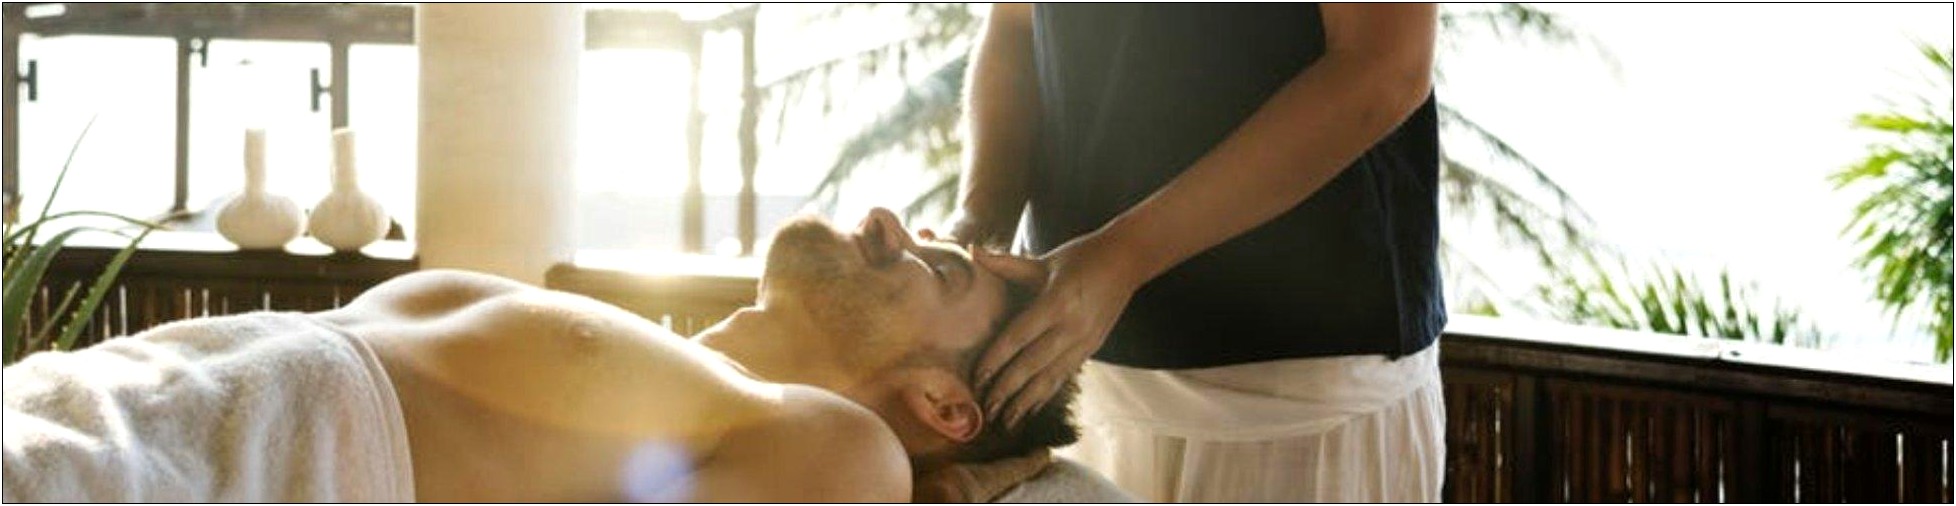 Sample Resume Format For Massage Therapist